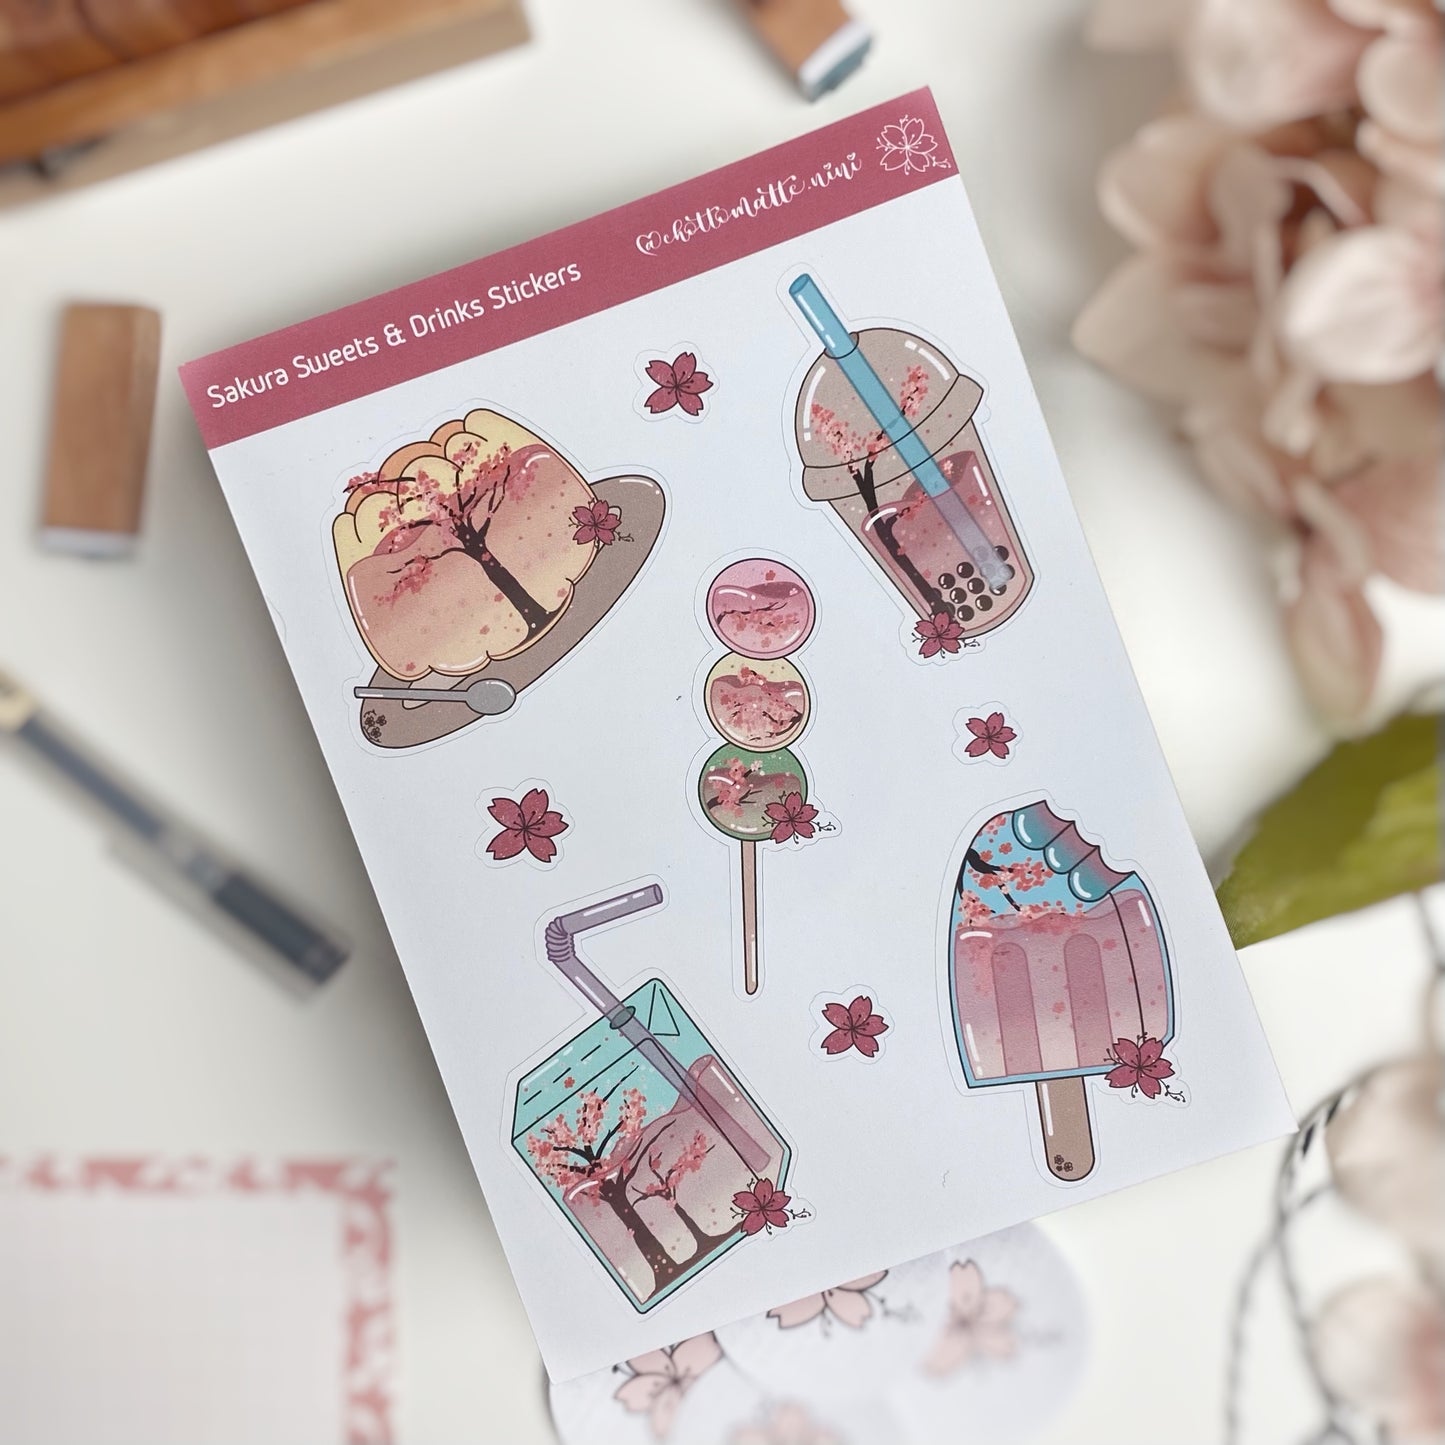 Sakura Sweets & Drinks Sticker Sheet